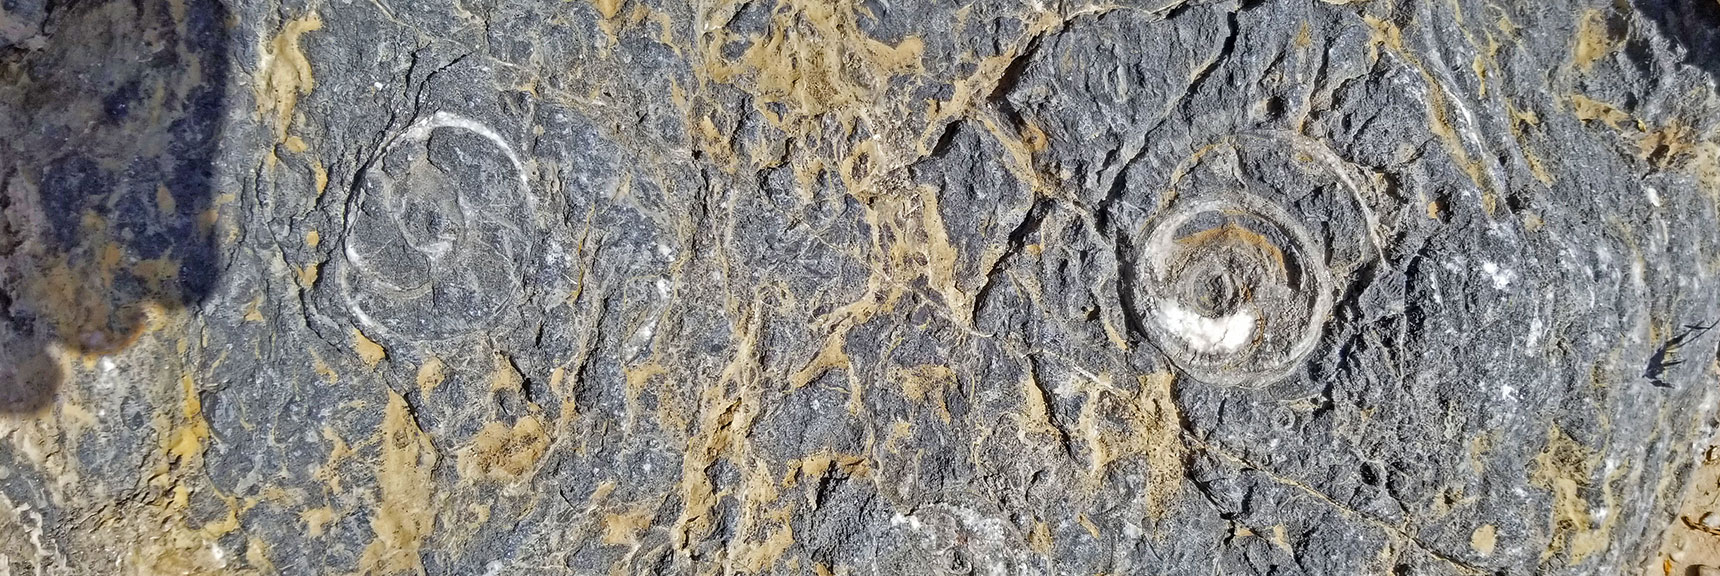 More Fossils Along the Base of Fossil Ridge | Fossil Ridge End to End | Sheep Range | Desert National Wildlife Refuge, Nevada